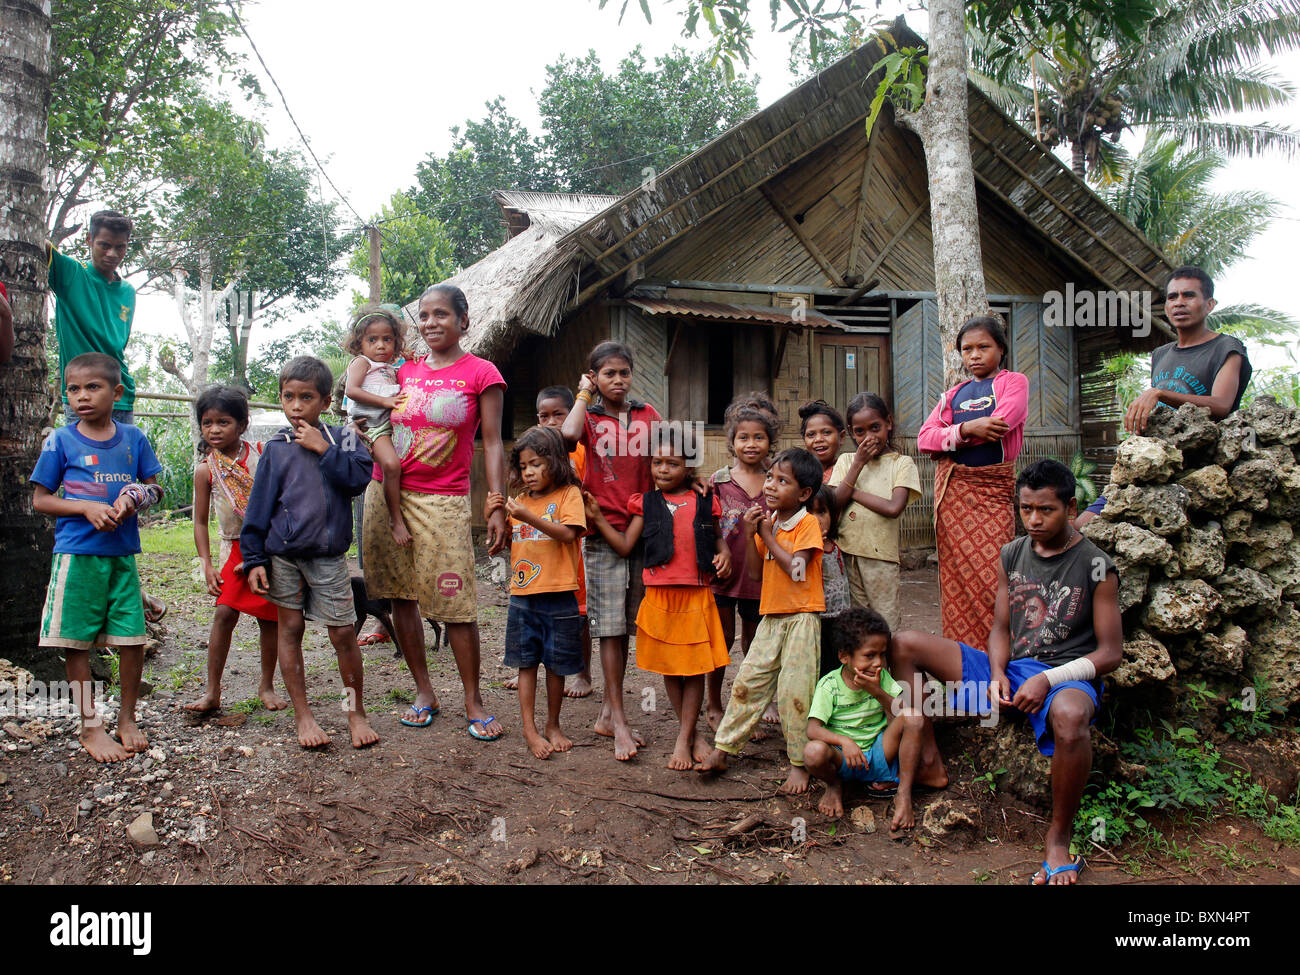 Village people in a village on Atauro Island, Timor Leste (East Timor) Stock Photo